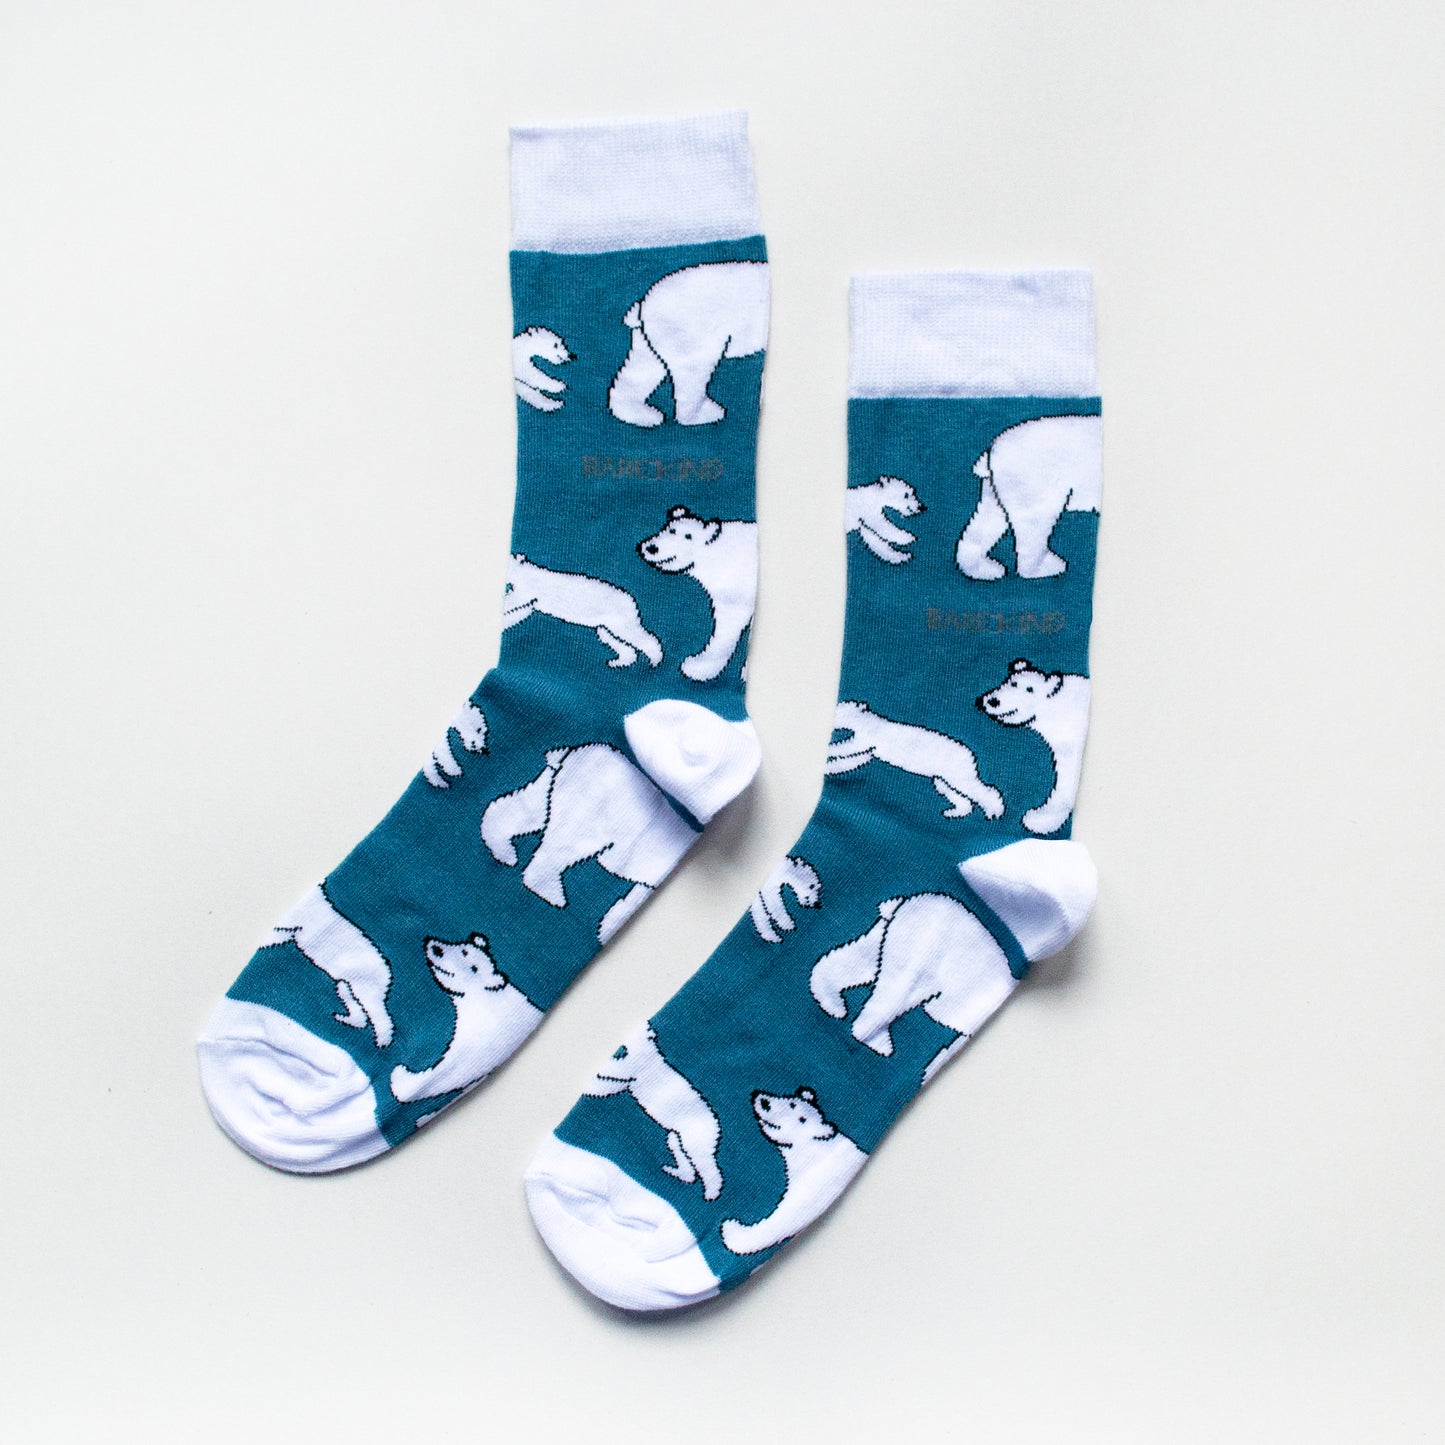 Bare Kind Bamboo Socks - Save the Polar Bears